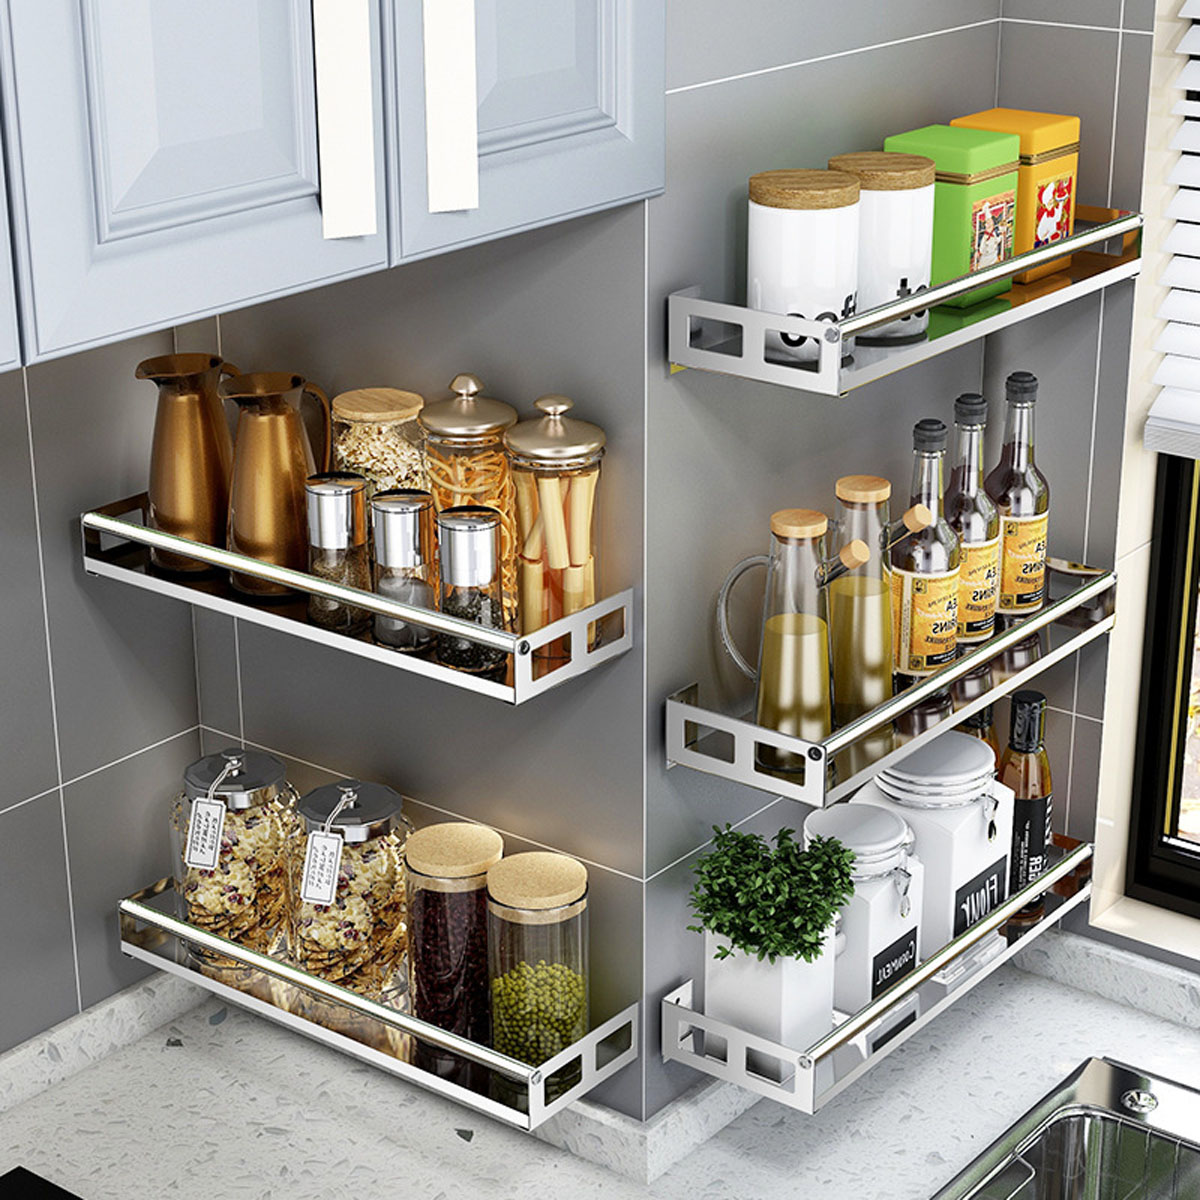 Singe-Layer-Stainless-Steel-Rack-Organizer-Storage-Wall-Mounted-Basket-for-Kitchen-Bathroom-Shower-S-1786418-9